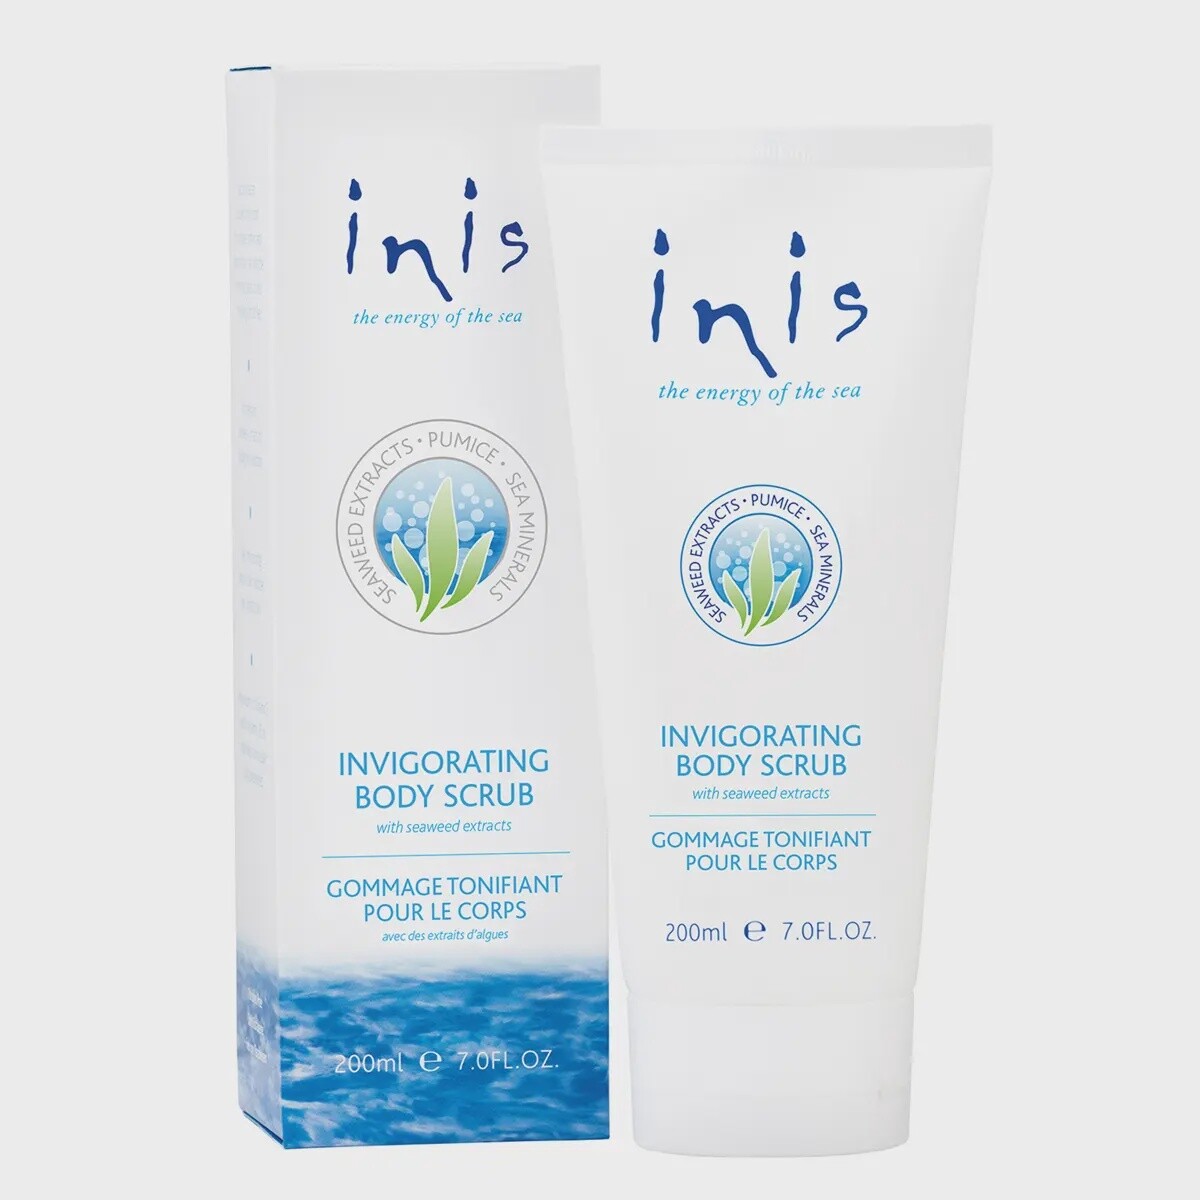 Inis Invigorating Body Scrub